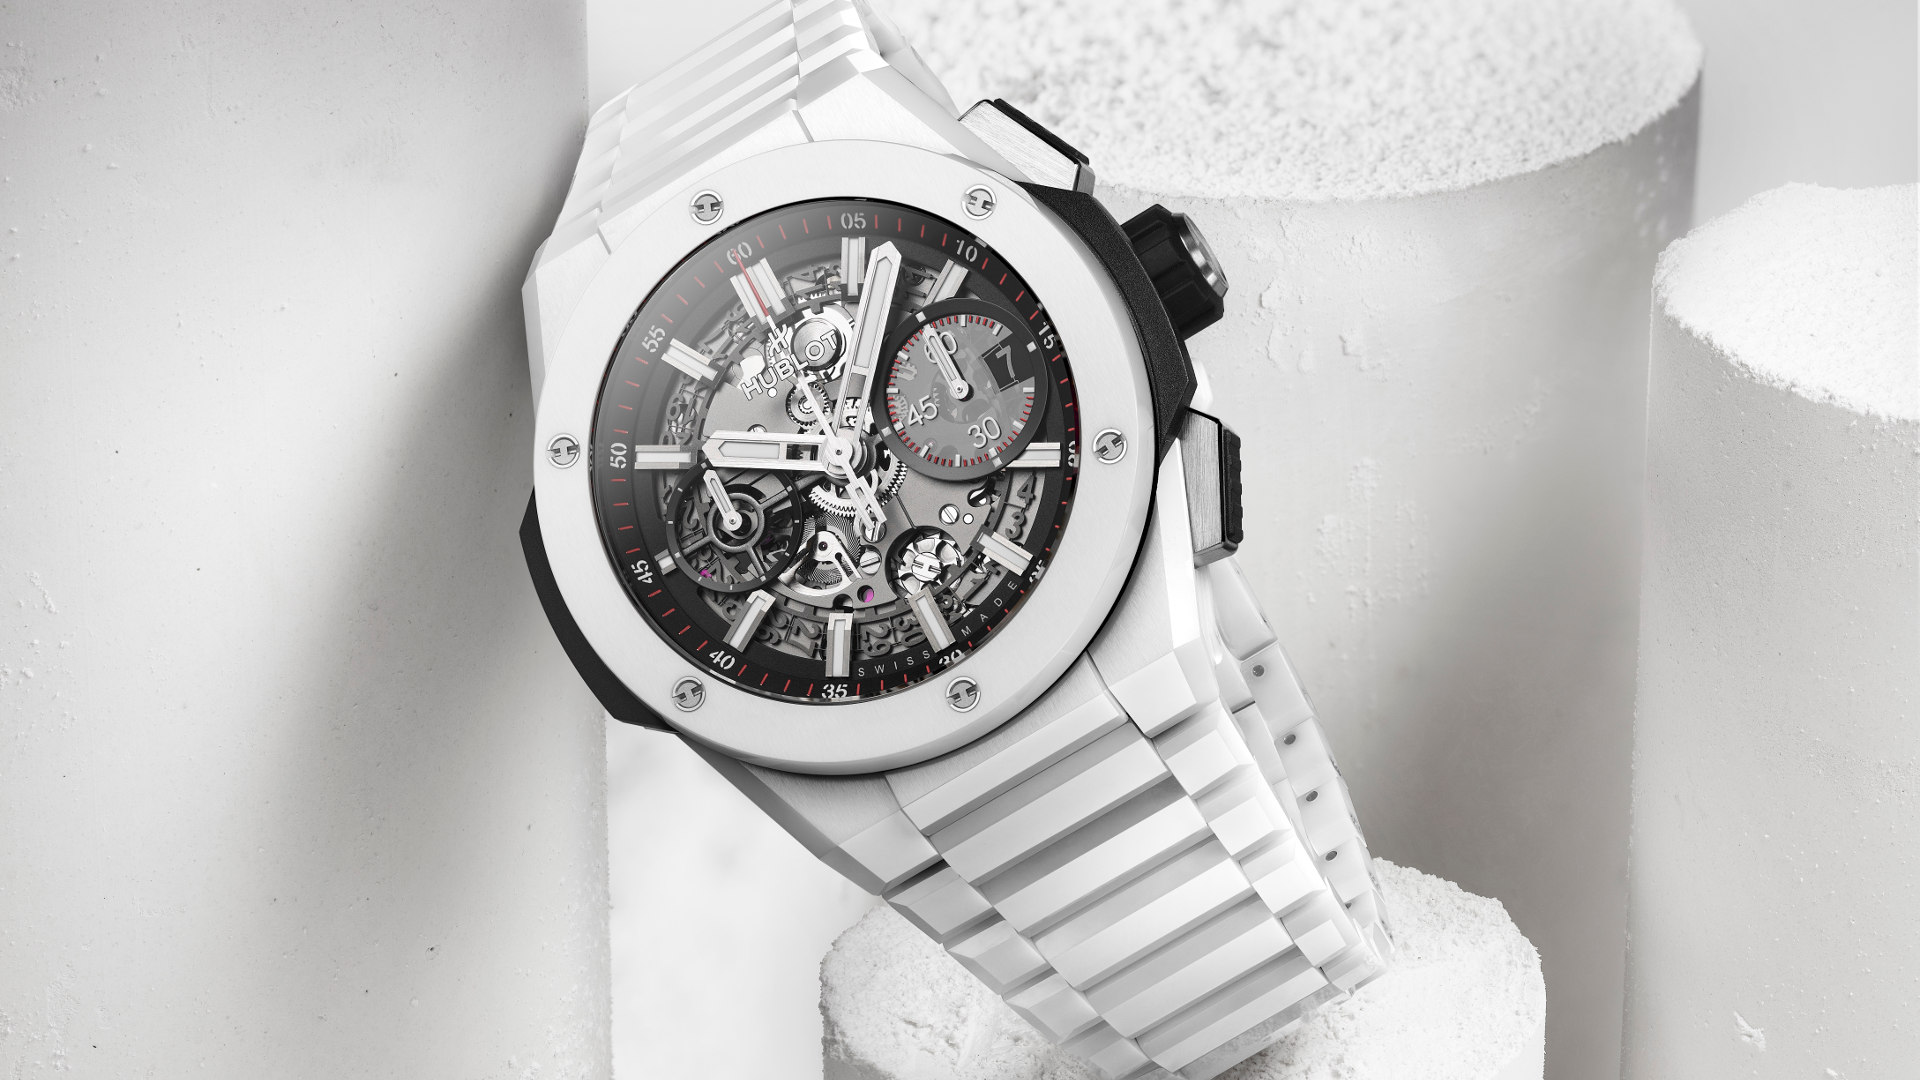 Hublot Big Bang Integral Ceramic – If you want a full ceramic watch but have bigger wrists